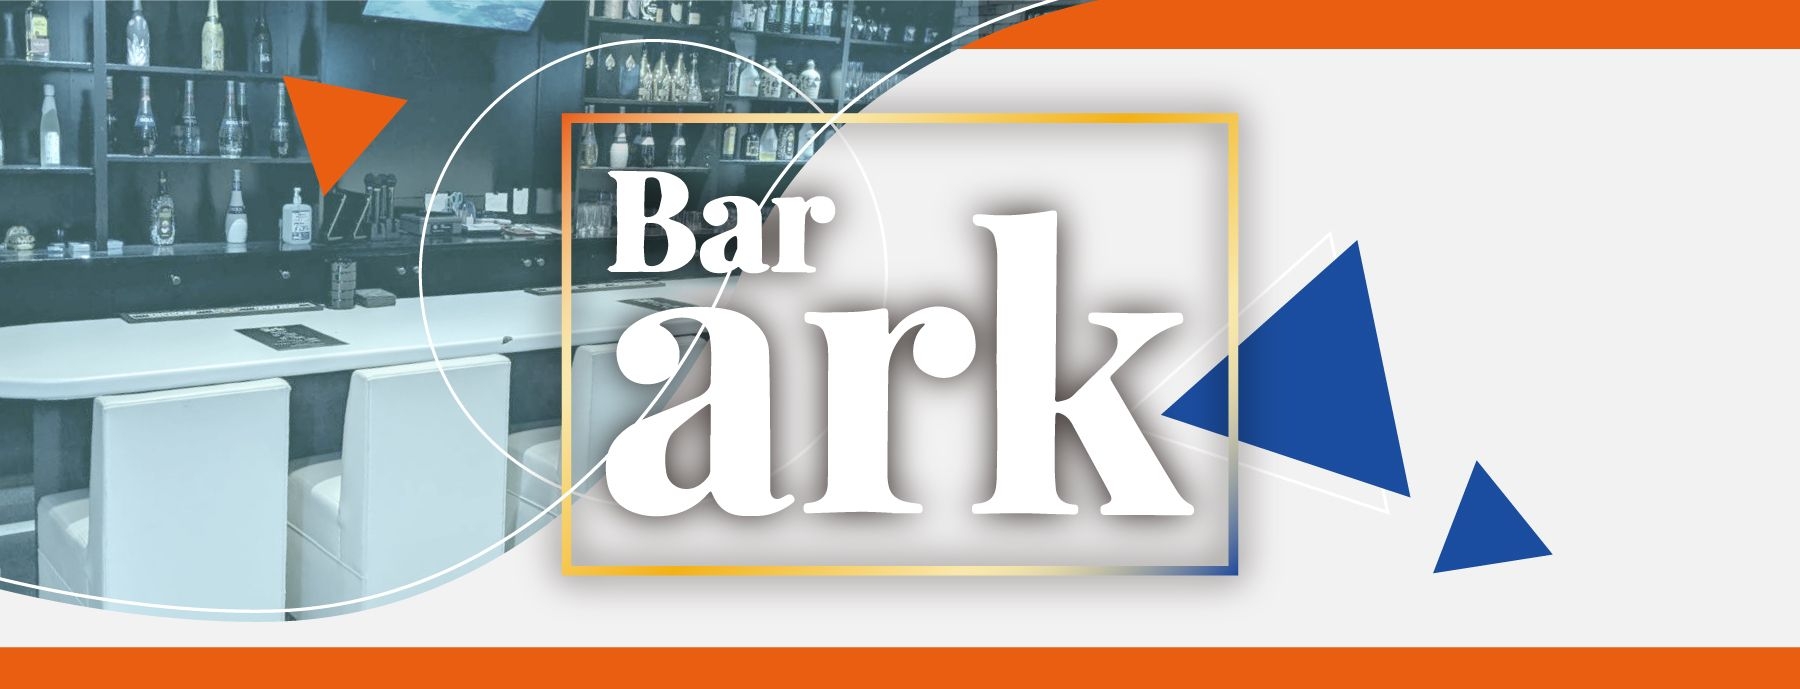 Bar ark 〜アーク〜